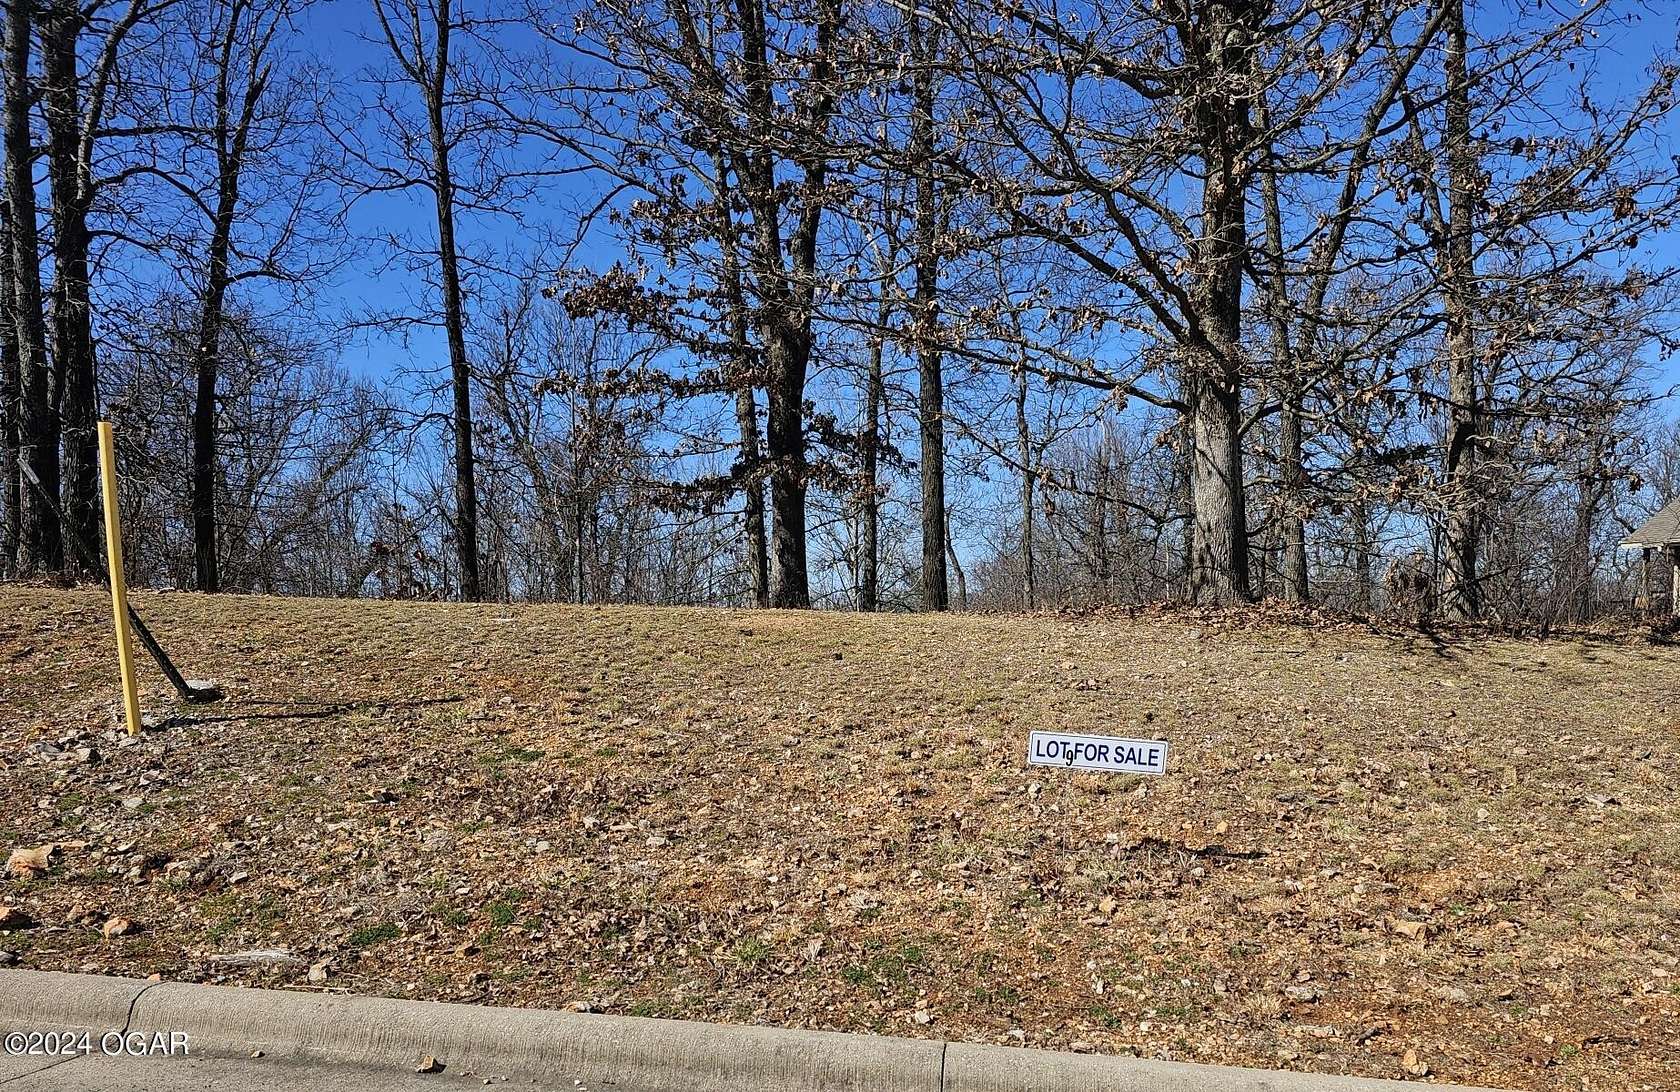 0.34 Acres of Residential Land for Sale in Joplin, Missouri